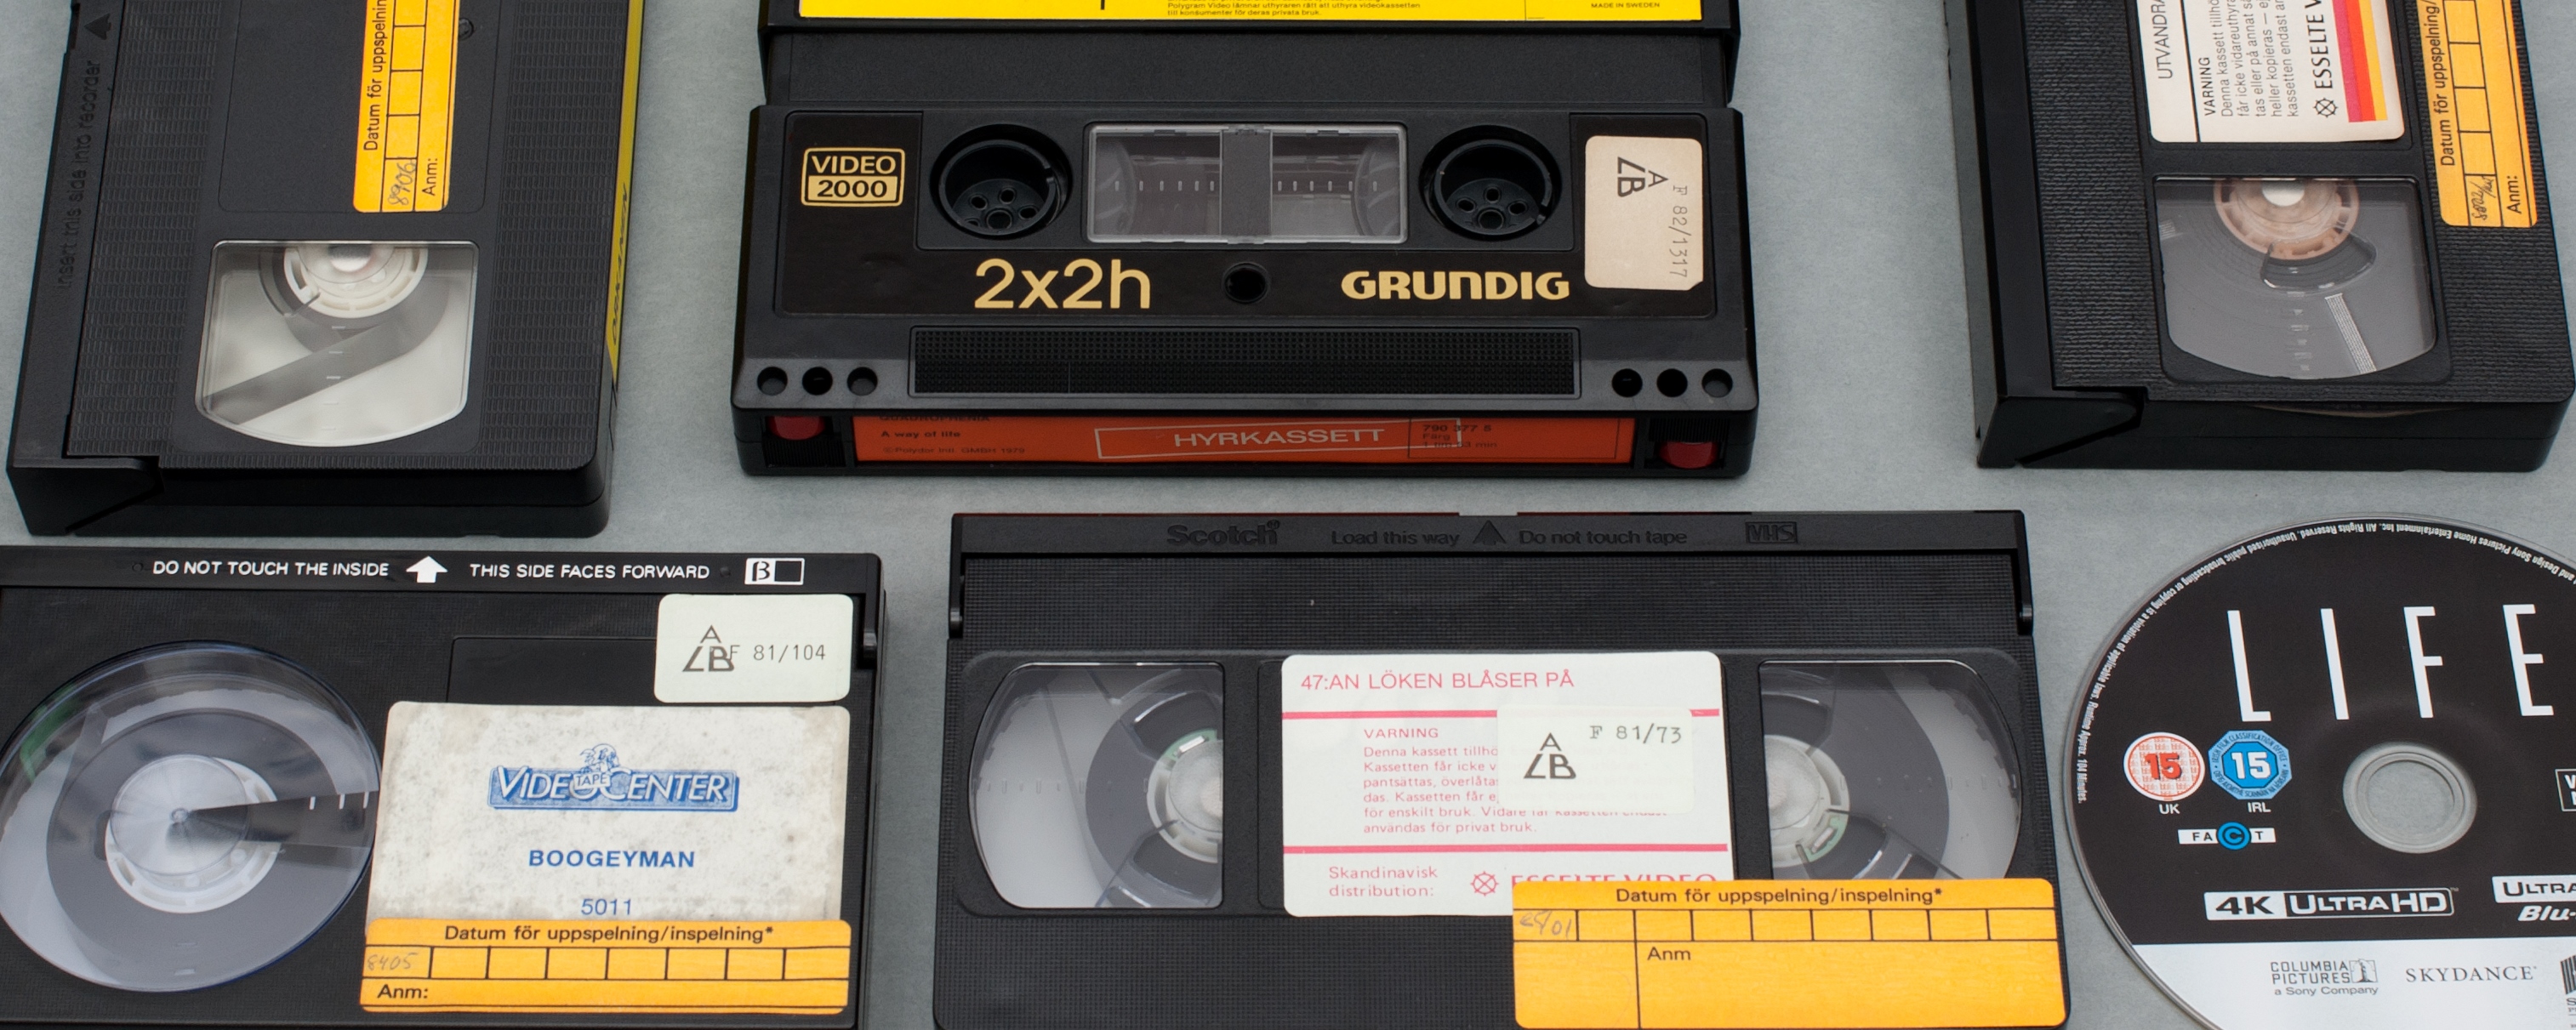 Videokassetter (VHS-band) och en DVD-skiva på ett bord.